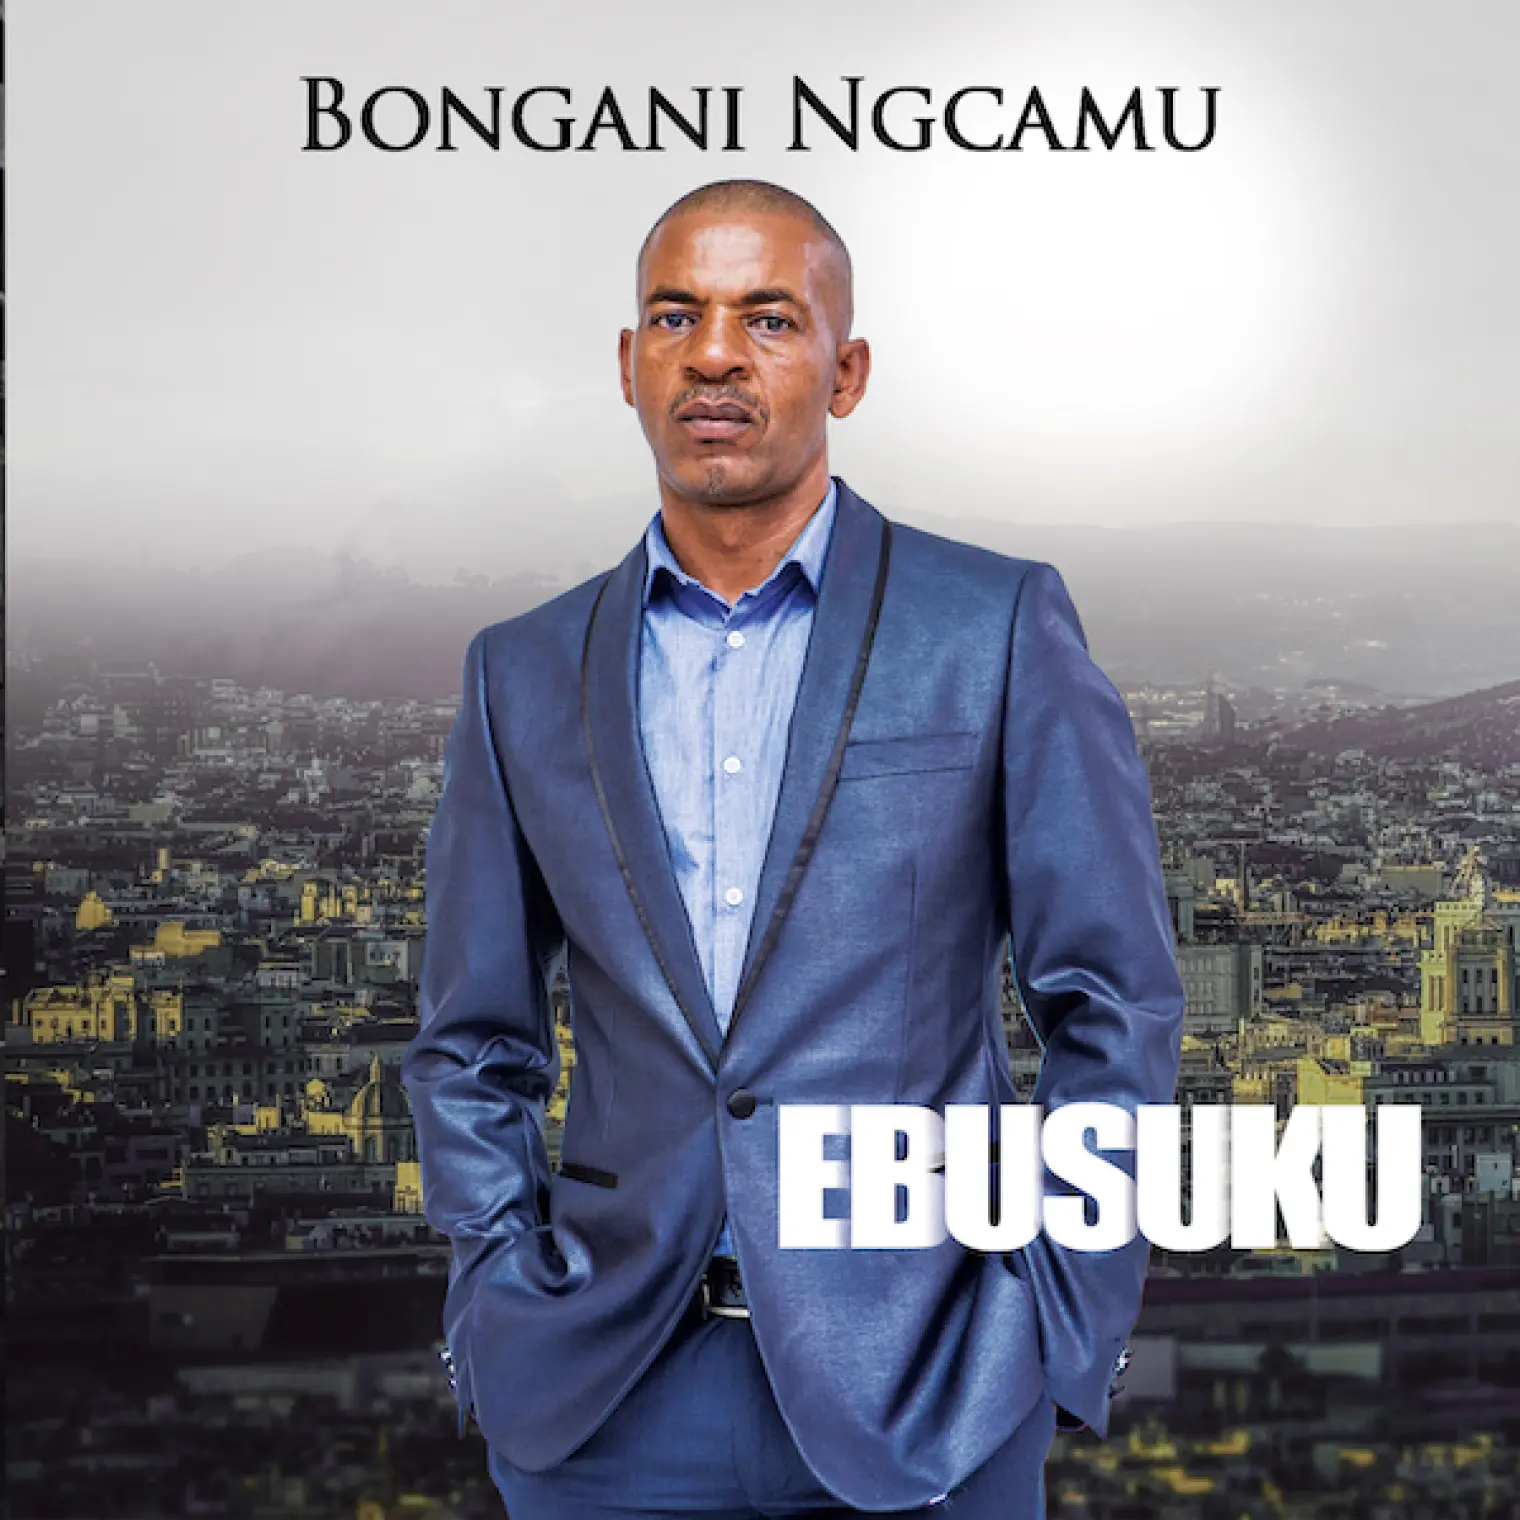 Ebusuku Album -  Bongani Ngcanu 